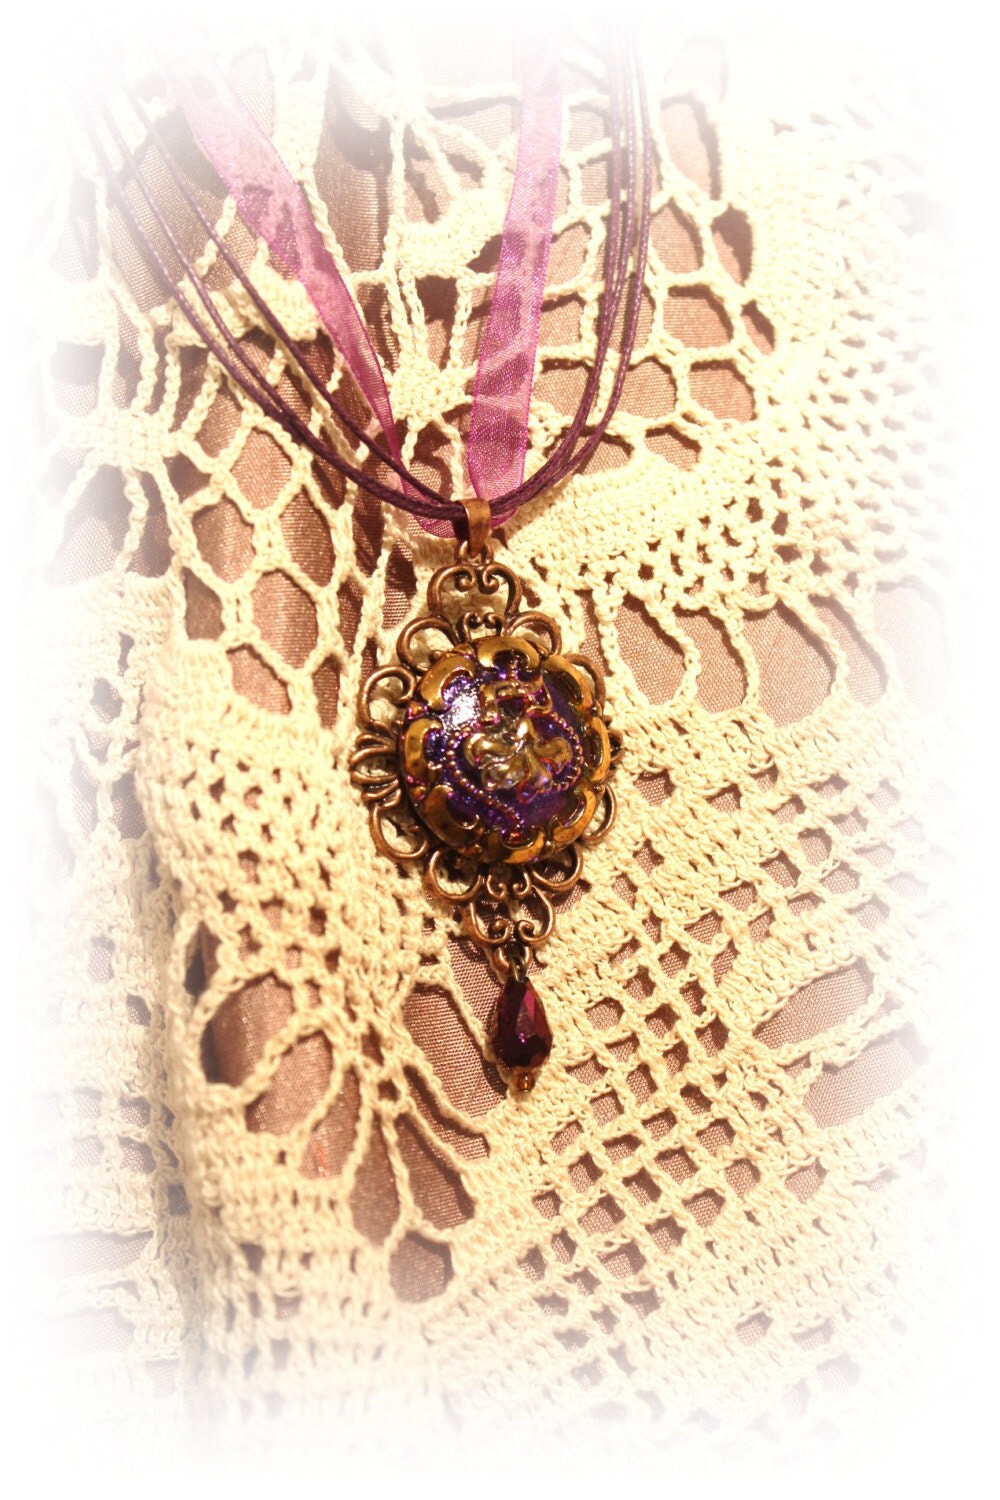 Czech Glass Button Pendant Necklace - Irridescent Purple on Rose Gold with a teardrop dangle bead - Victorian Steampunk Taffeta cord Jewelry